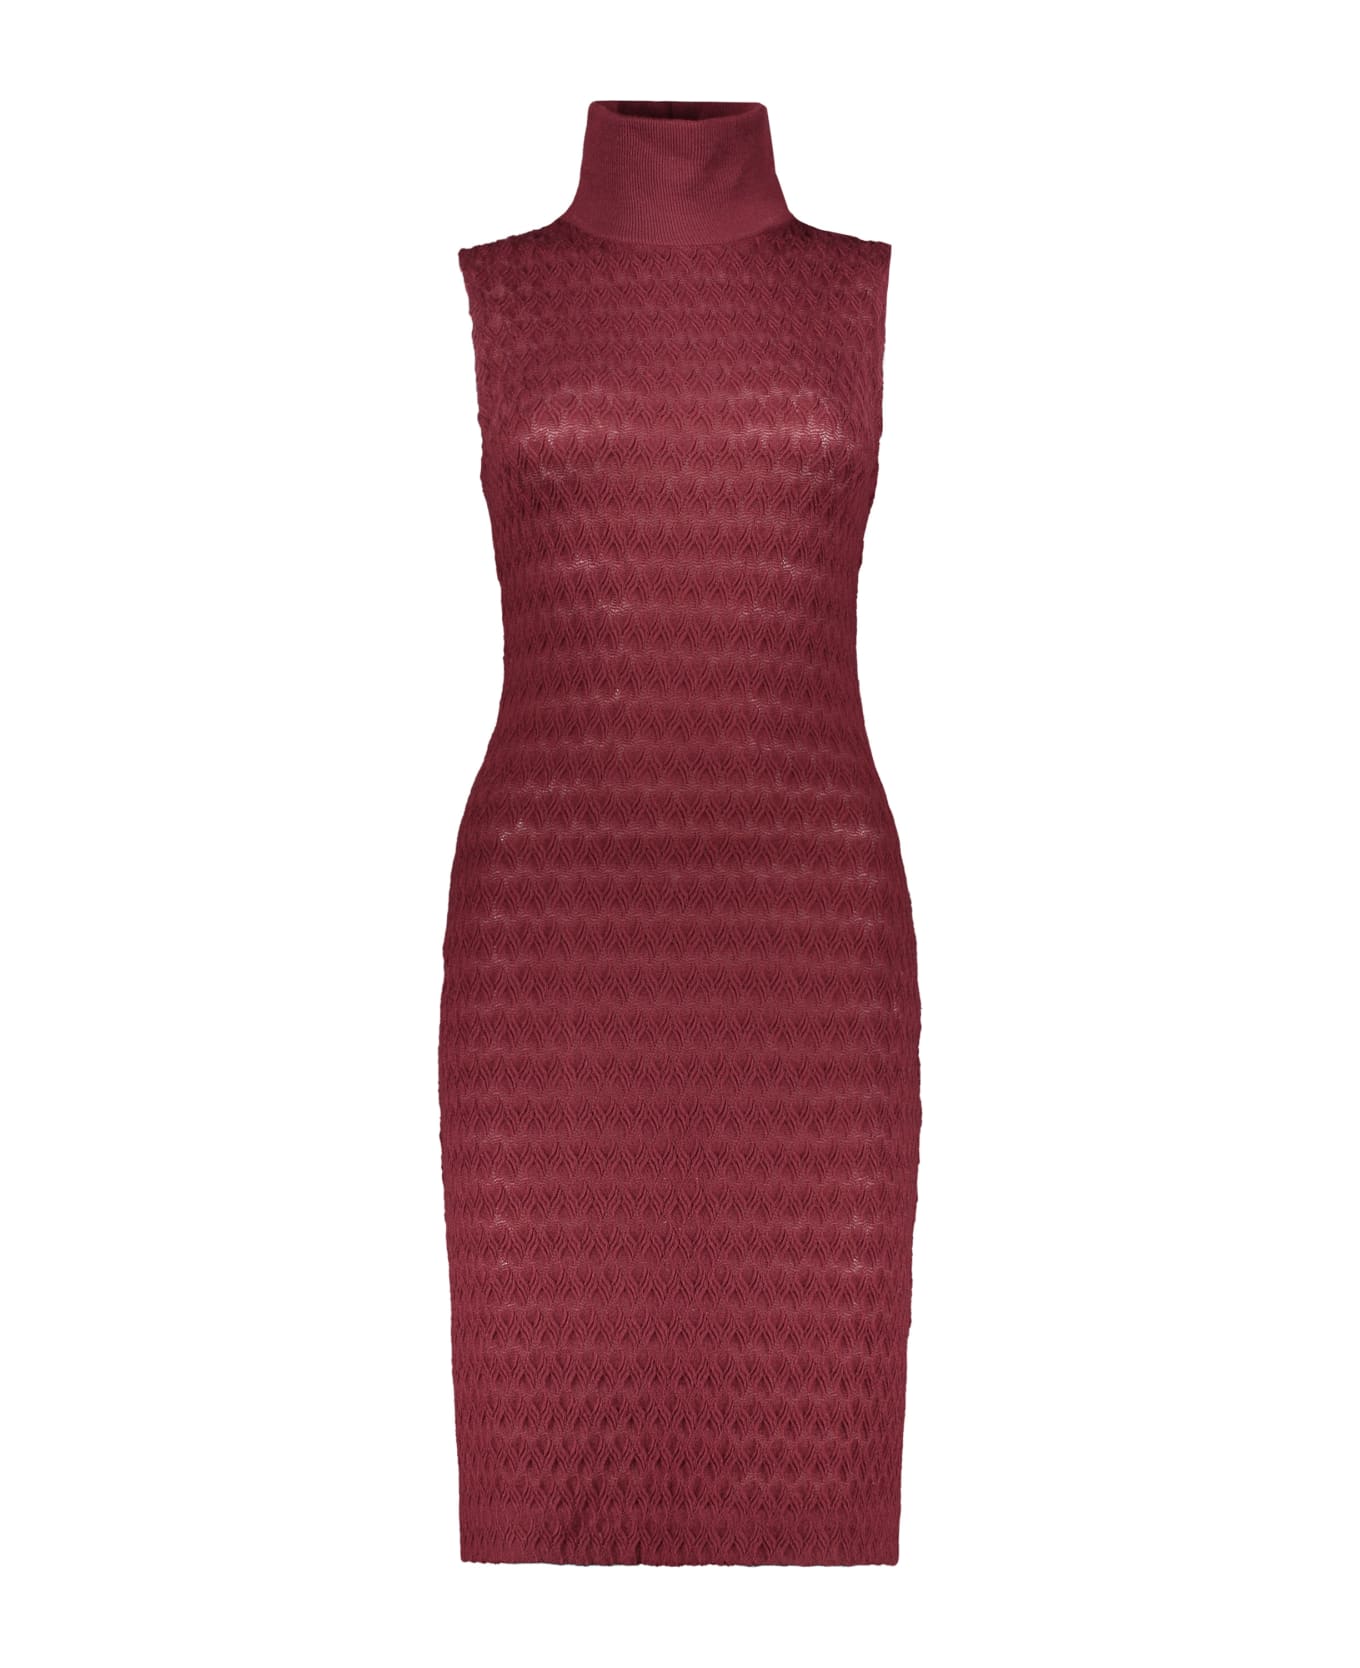 Missoni Knitted Dress - Burgundy